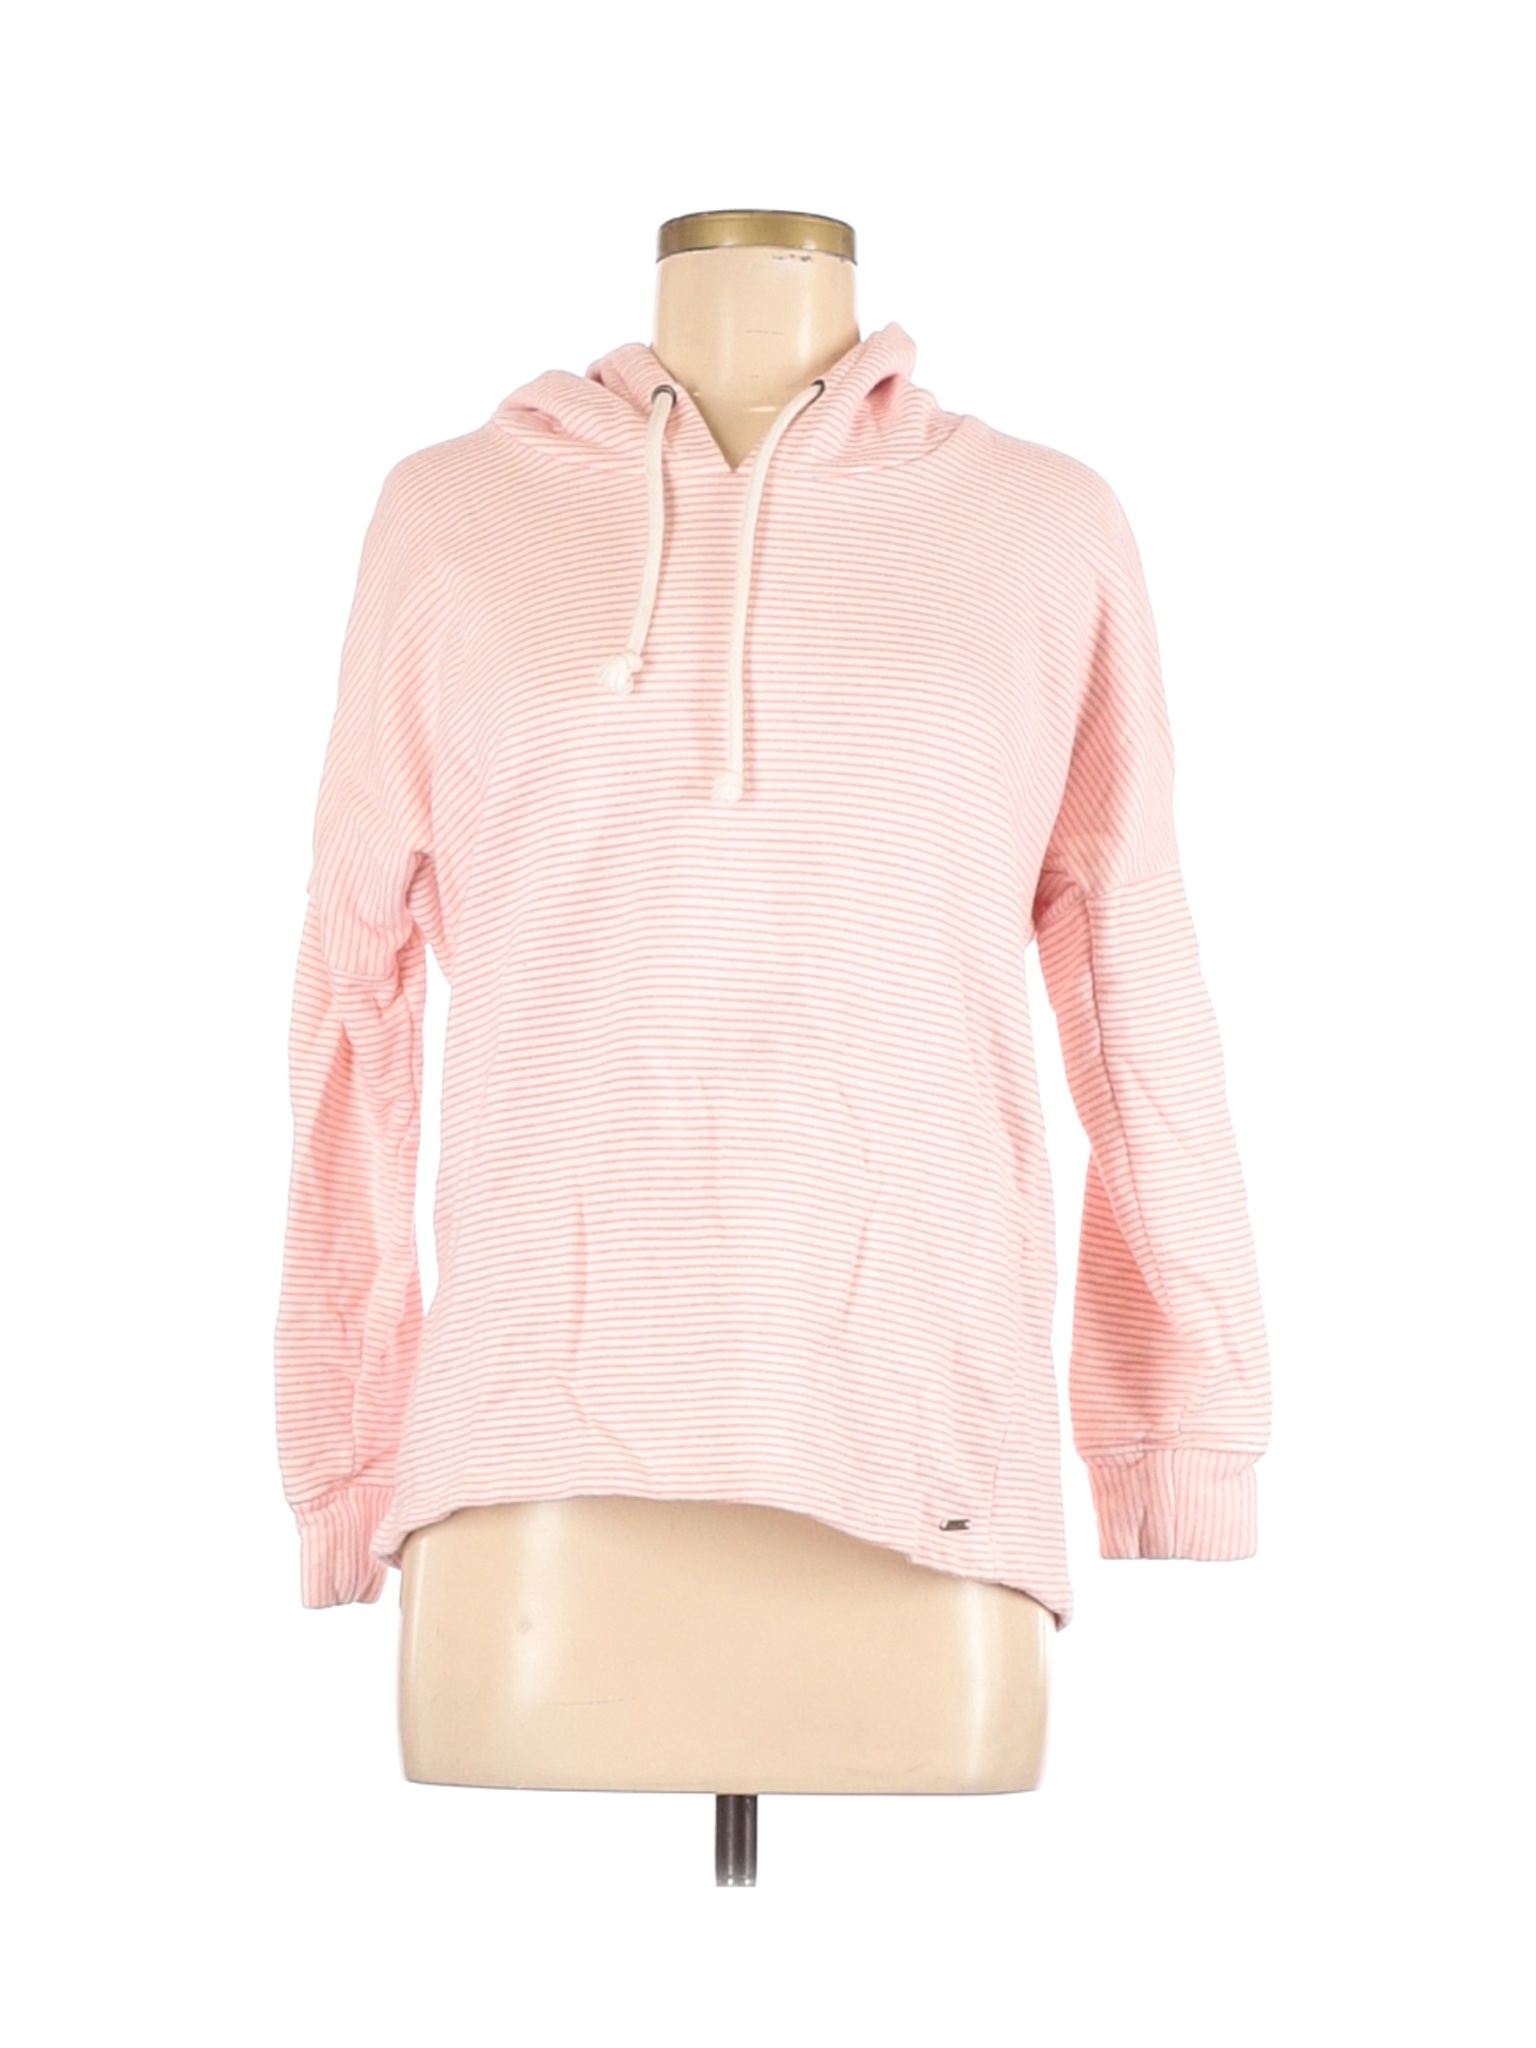 O'Neill Women Pink Pullover Hoodie M | eBay